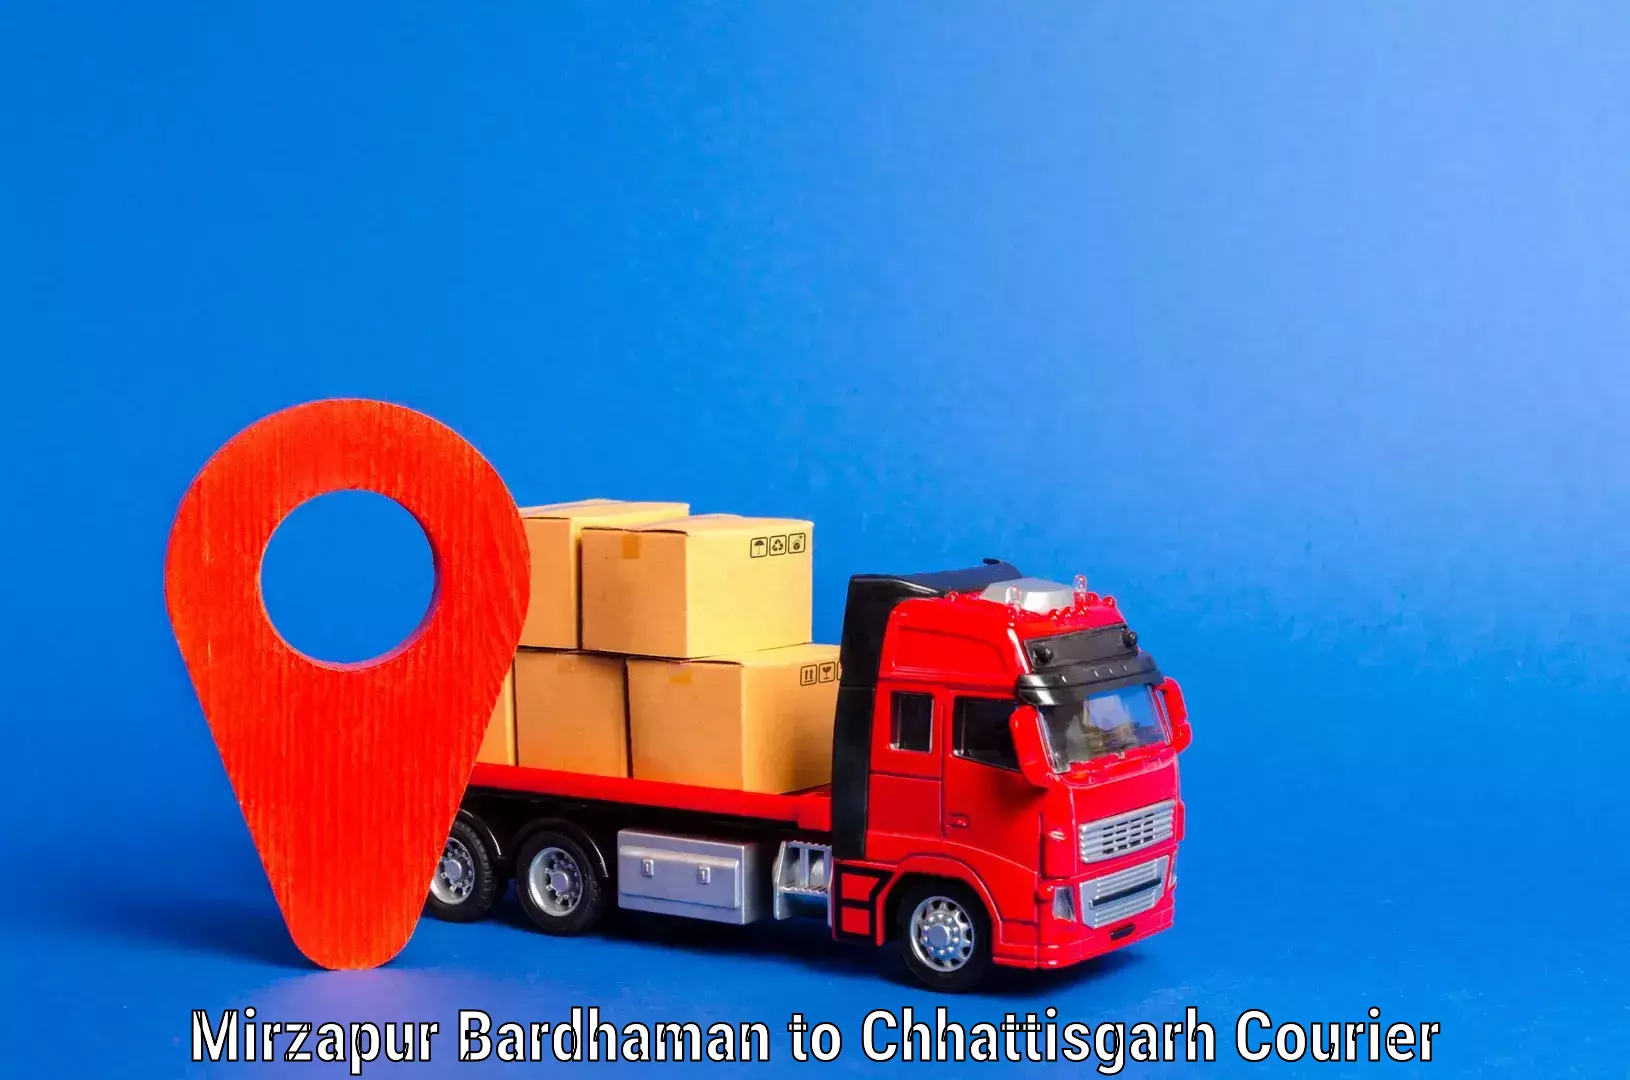 Furniture transport professionals Mirzapur Bardhaman to Chhattisgarh